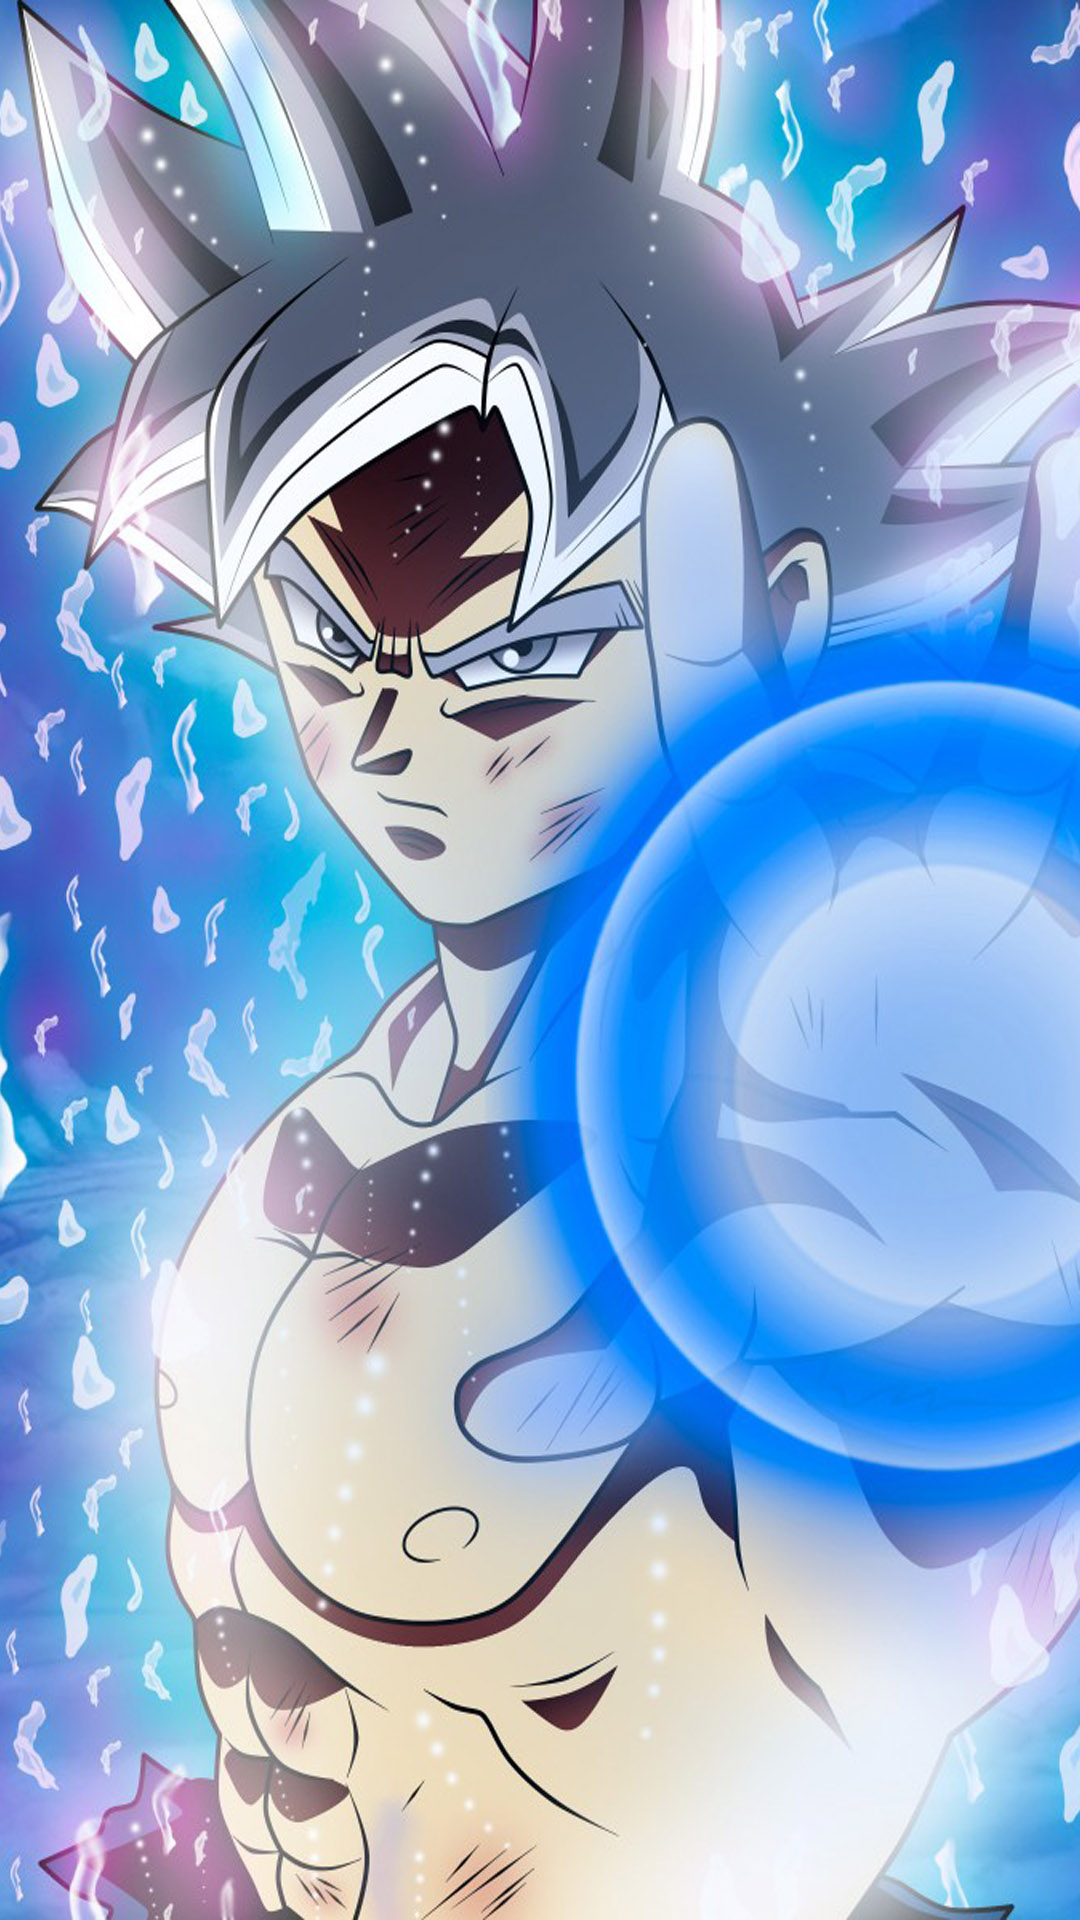 Ultra Instinct Goku In Dragon Ball Super Free 4K Ultra HD ...